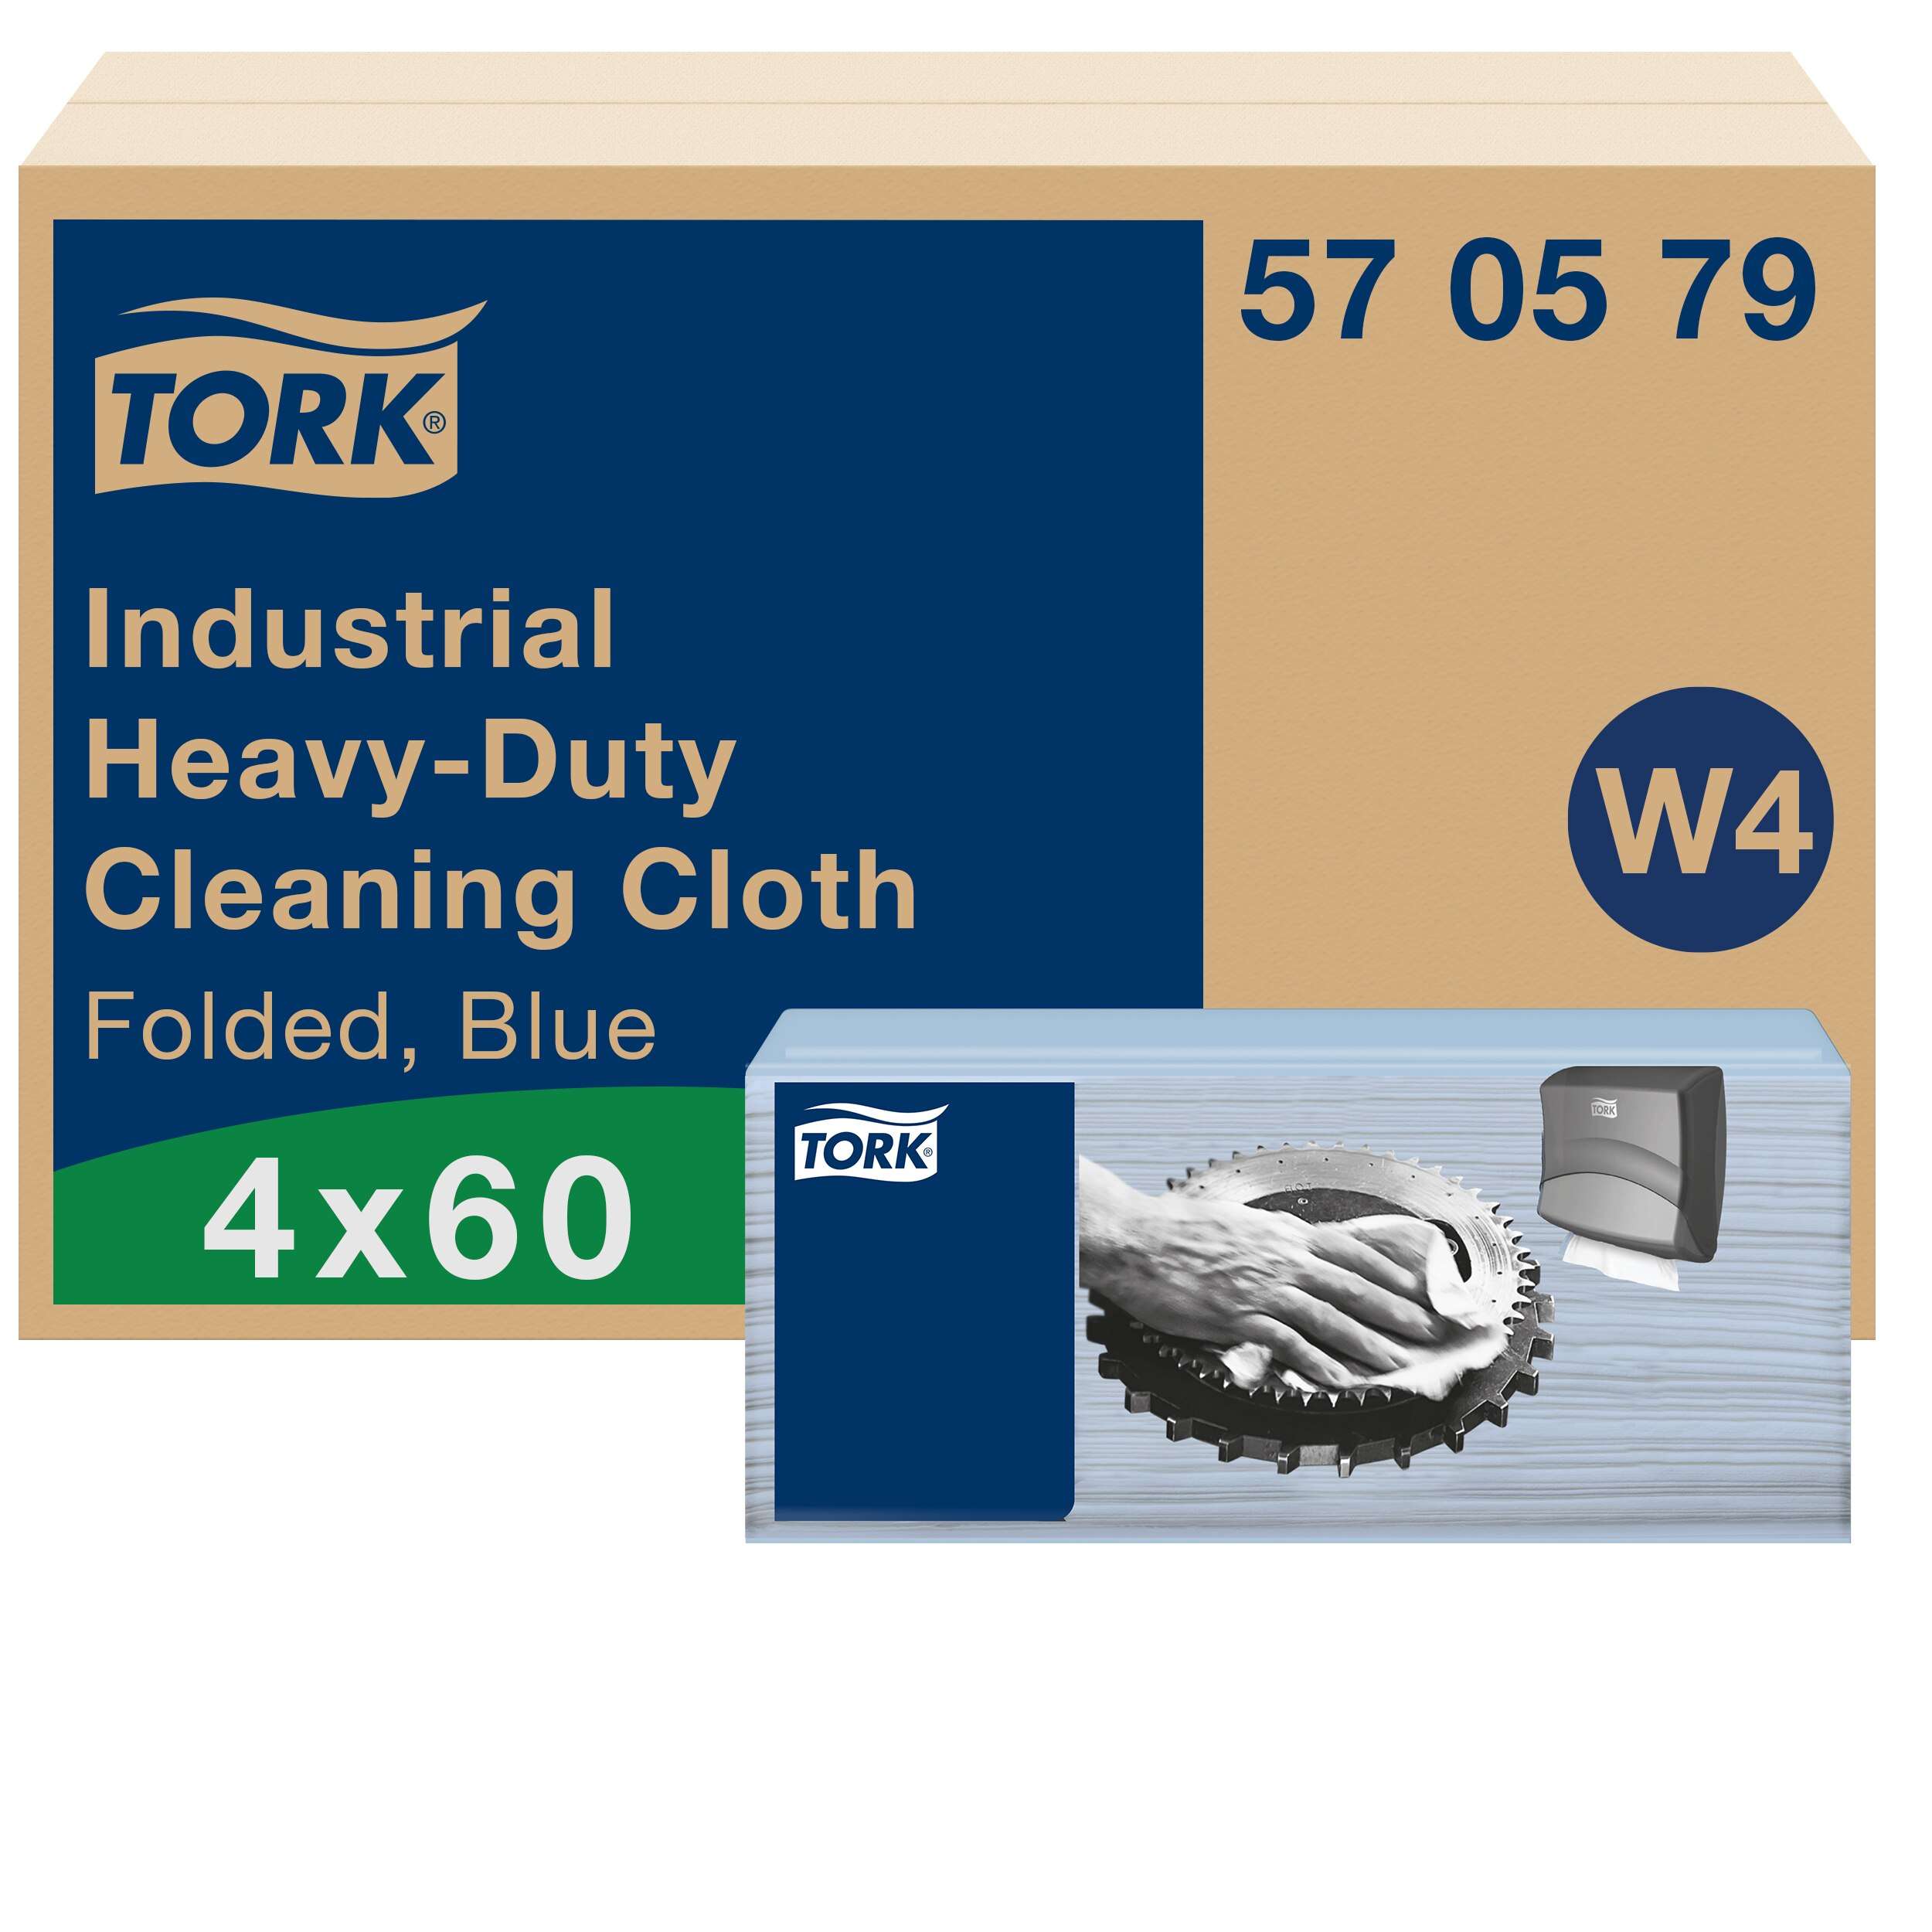 Tork Industrial Heavy-Duty Cleaning Cloth Blue W4